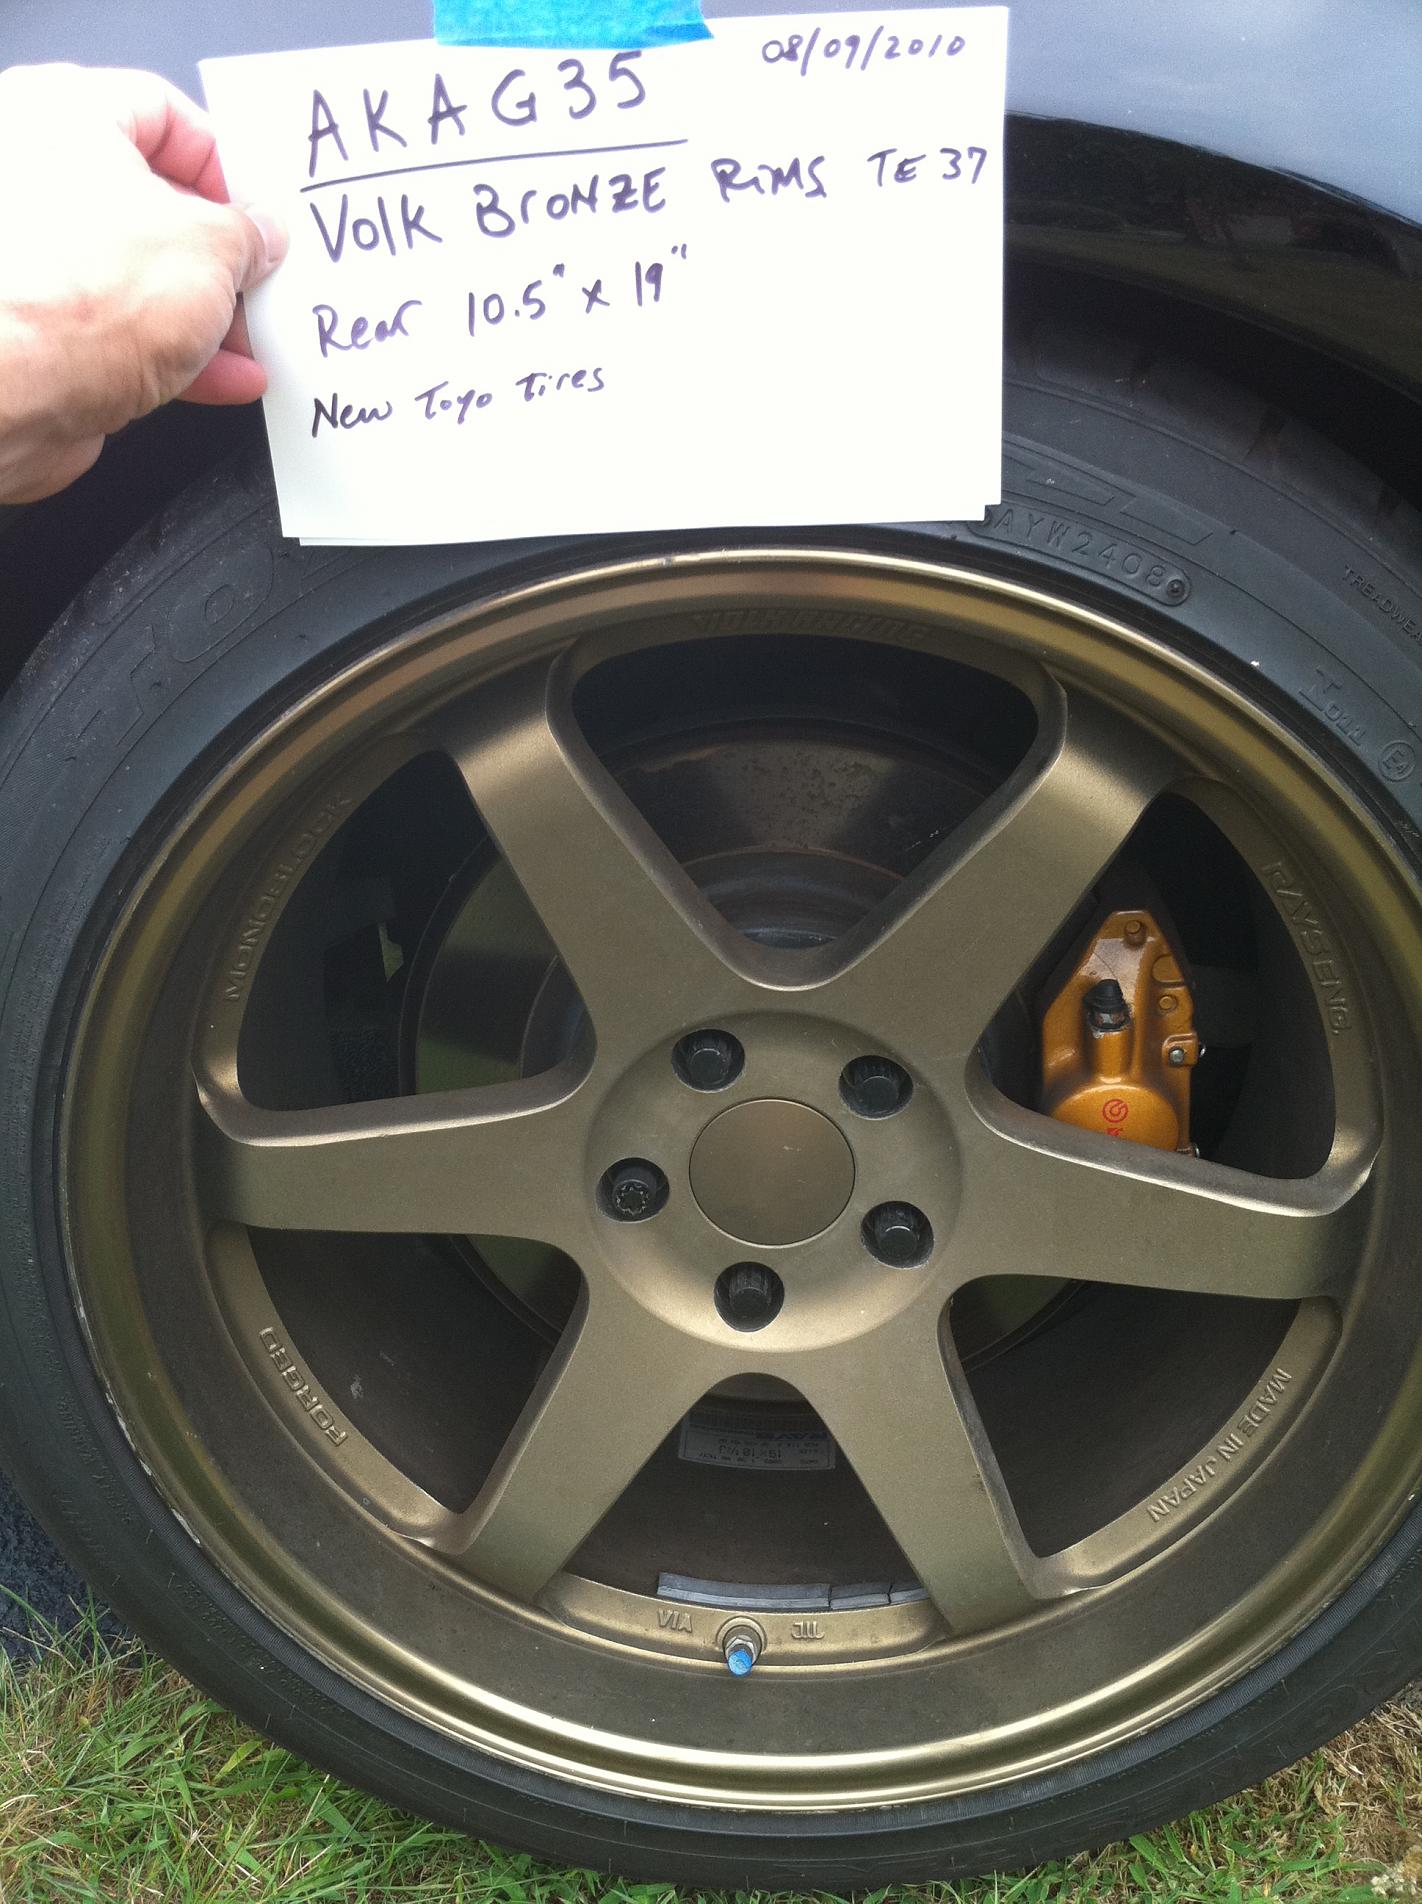 124482d1281414546-volk-bronze-te-37-19-rims-used-new-toyo-tires-rear.jpg